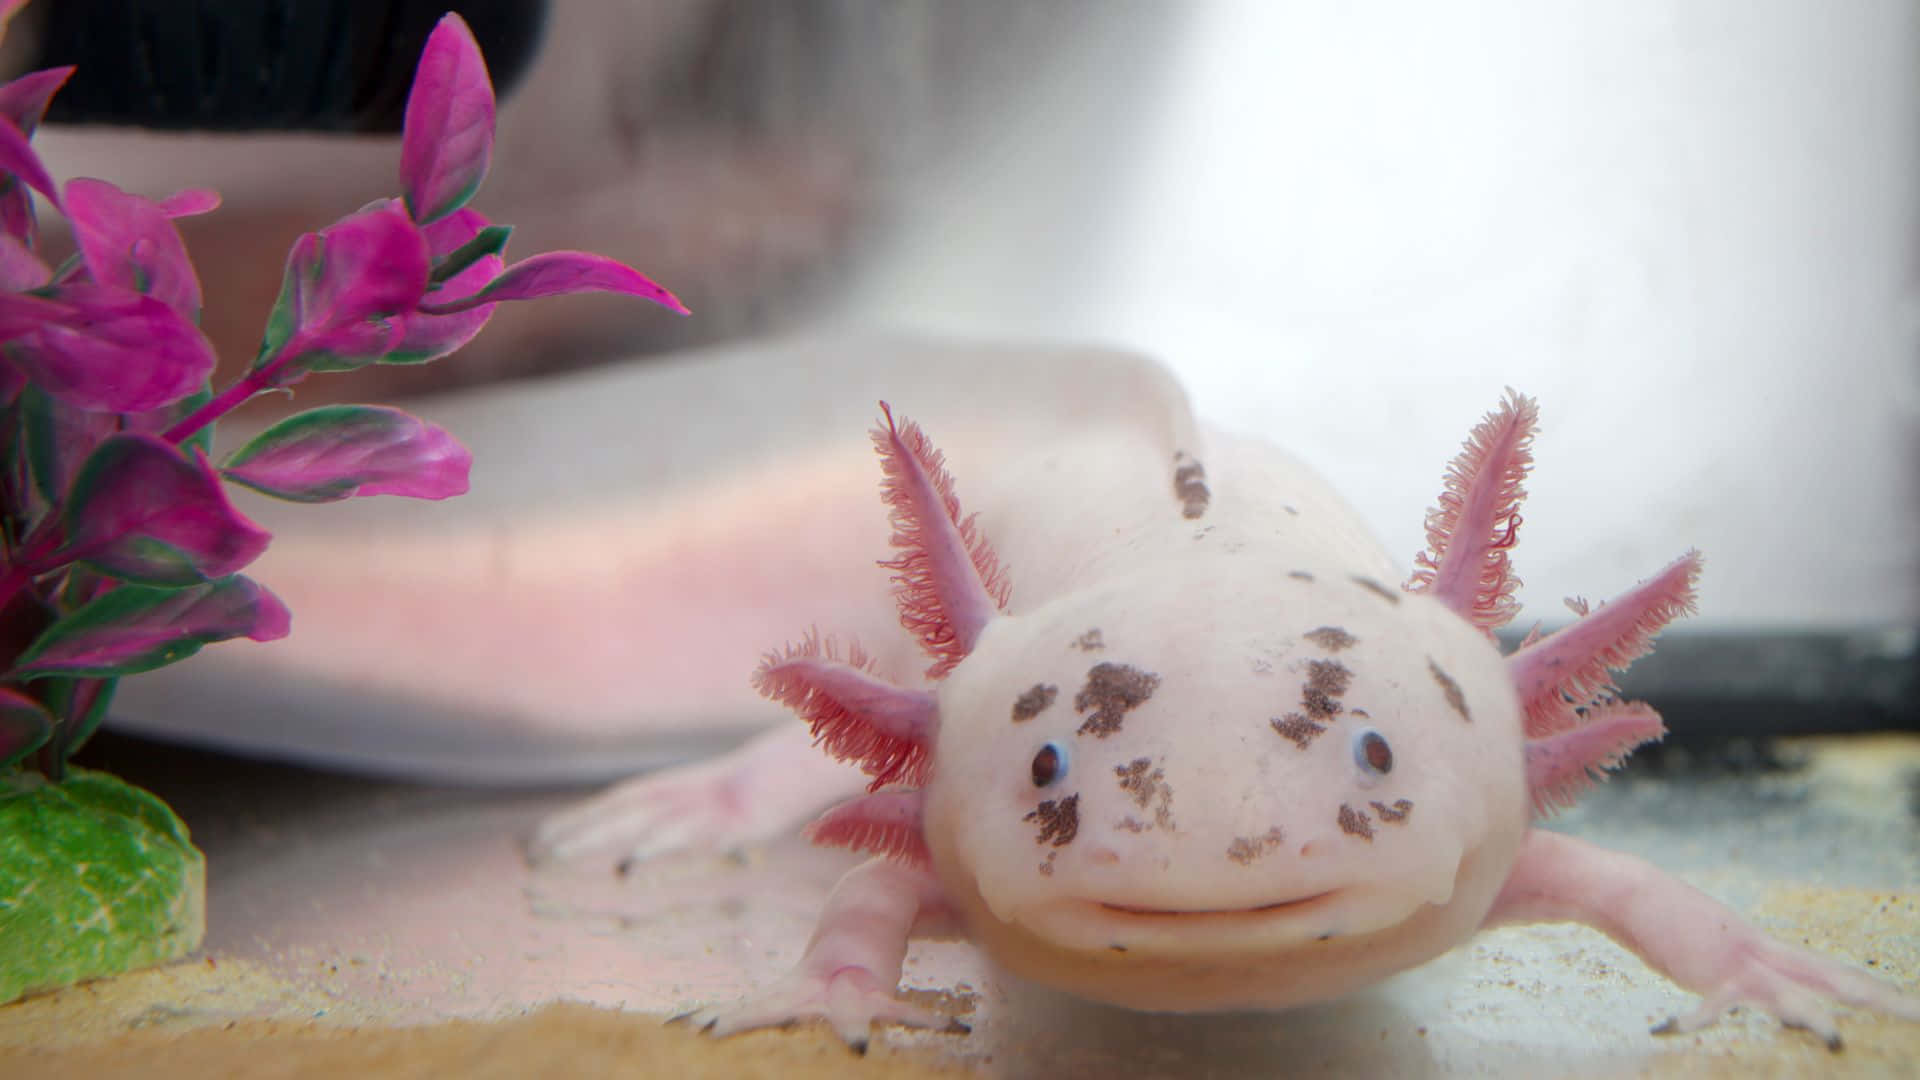 Axolotl HD Wallpaper, Free Axolotl Wallpaper Image For All Devices